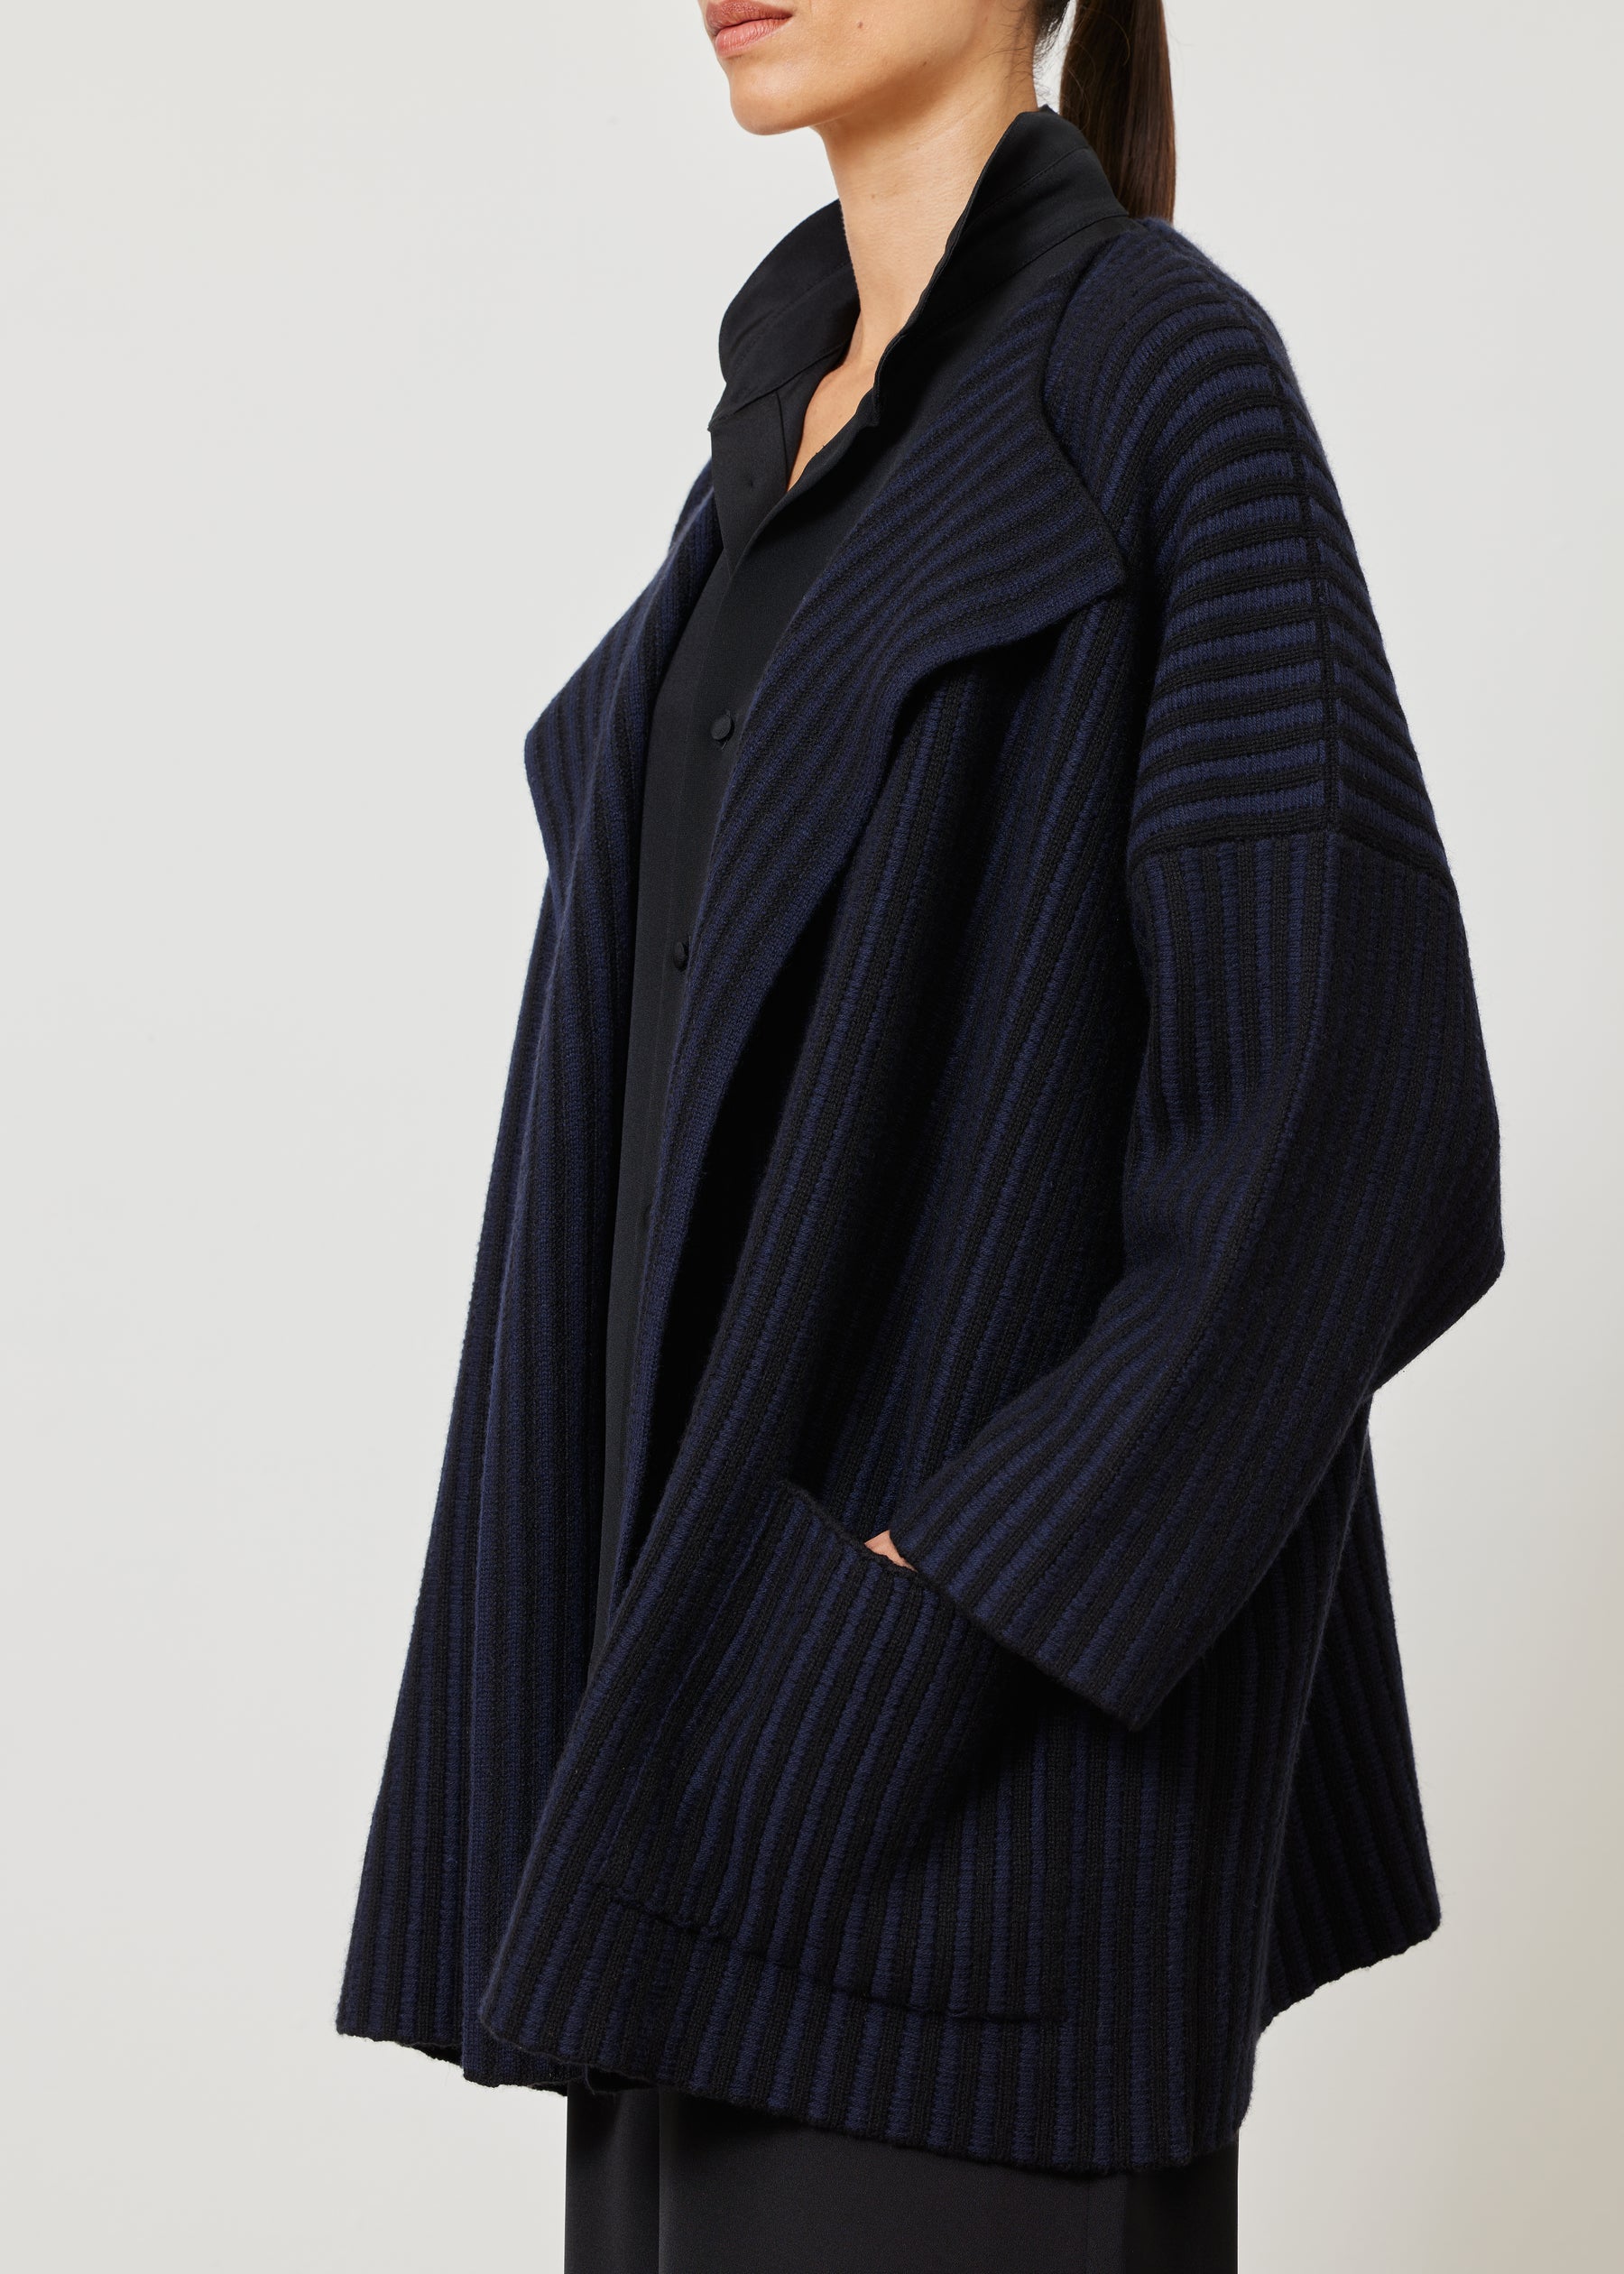 knitted jacket coat cardigan - mid plus